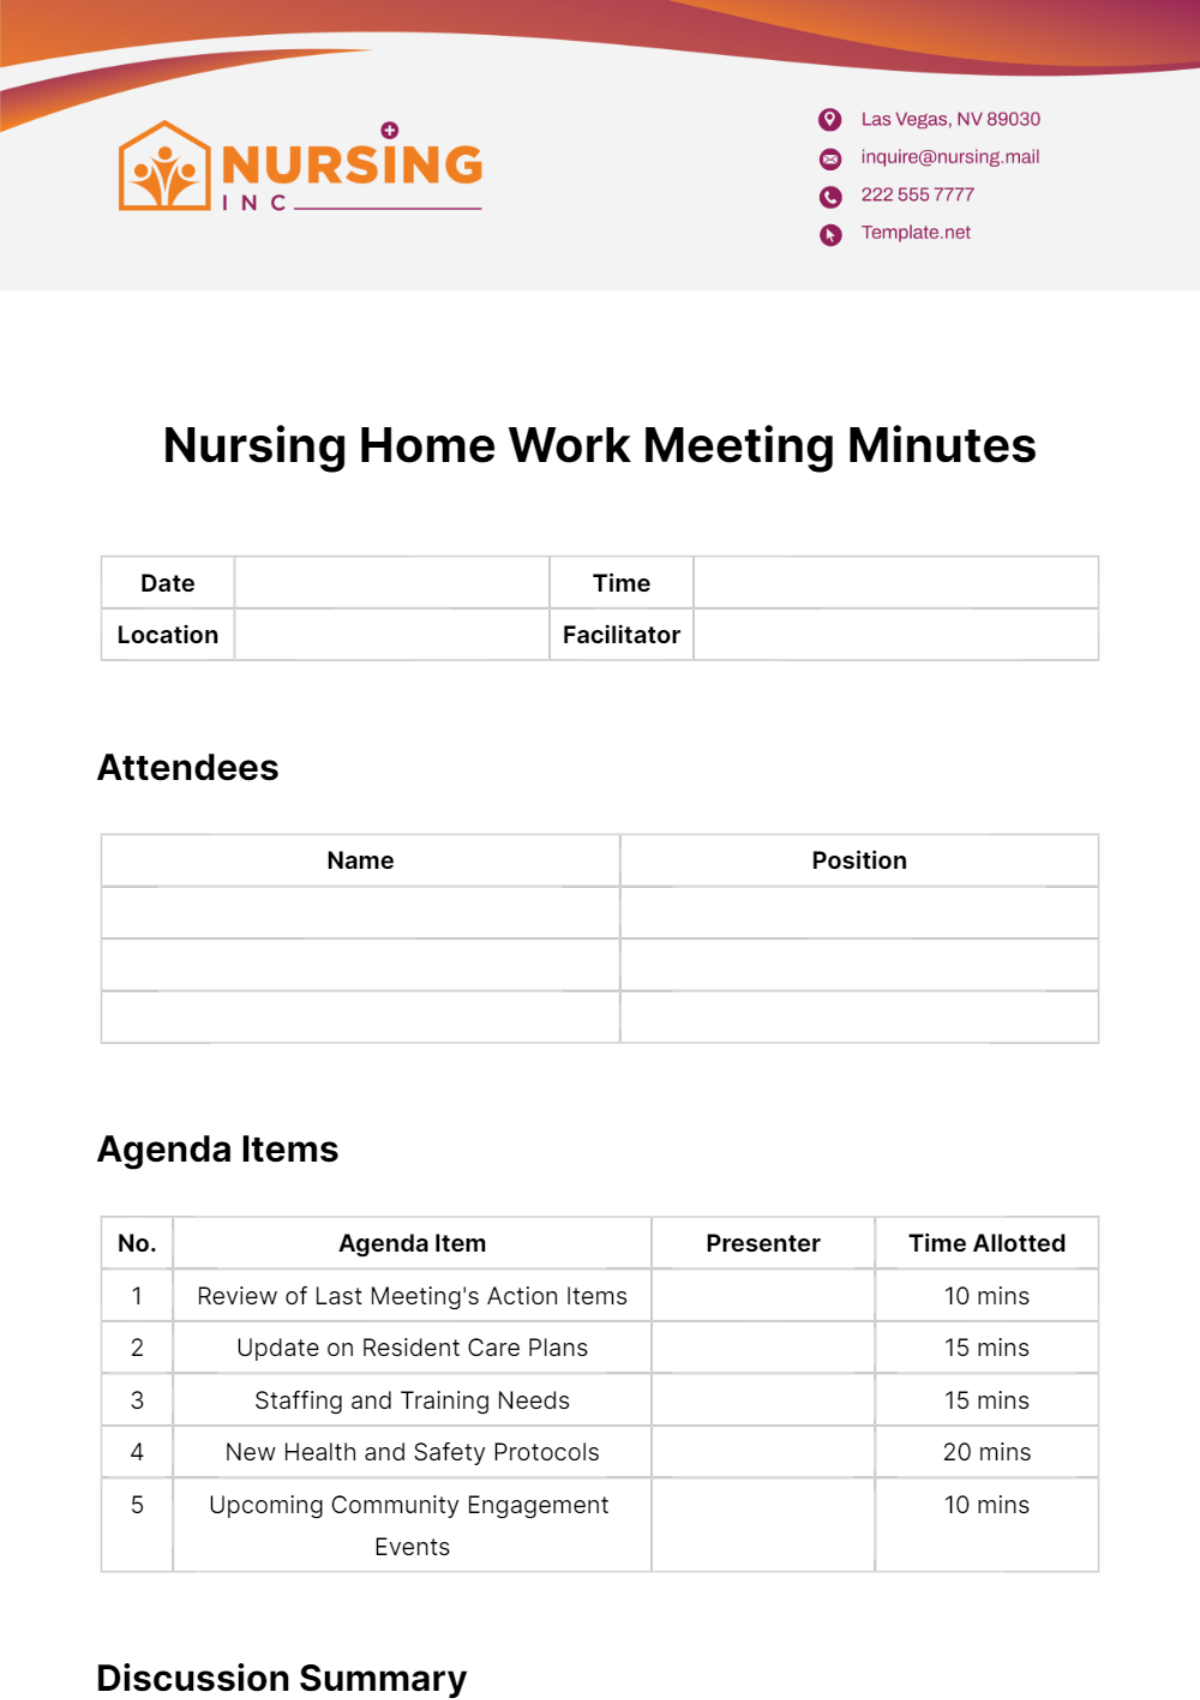 Nursing Home Work Meeting Minutes Template